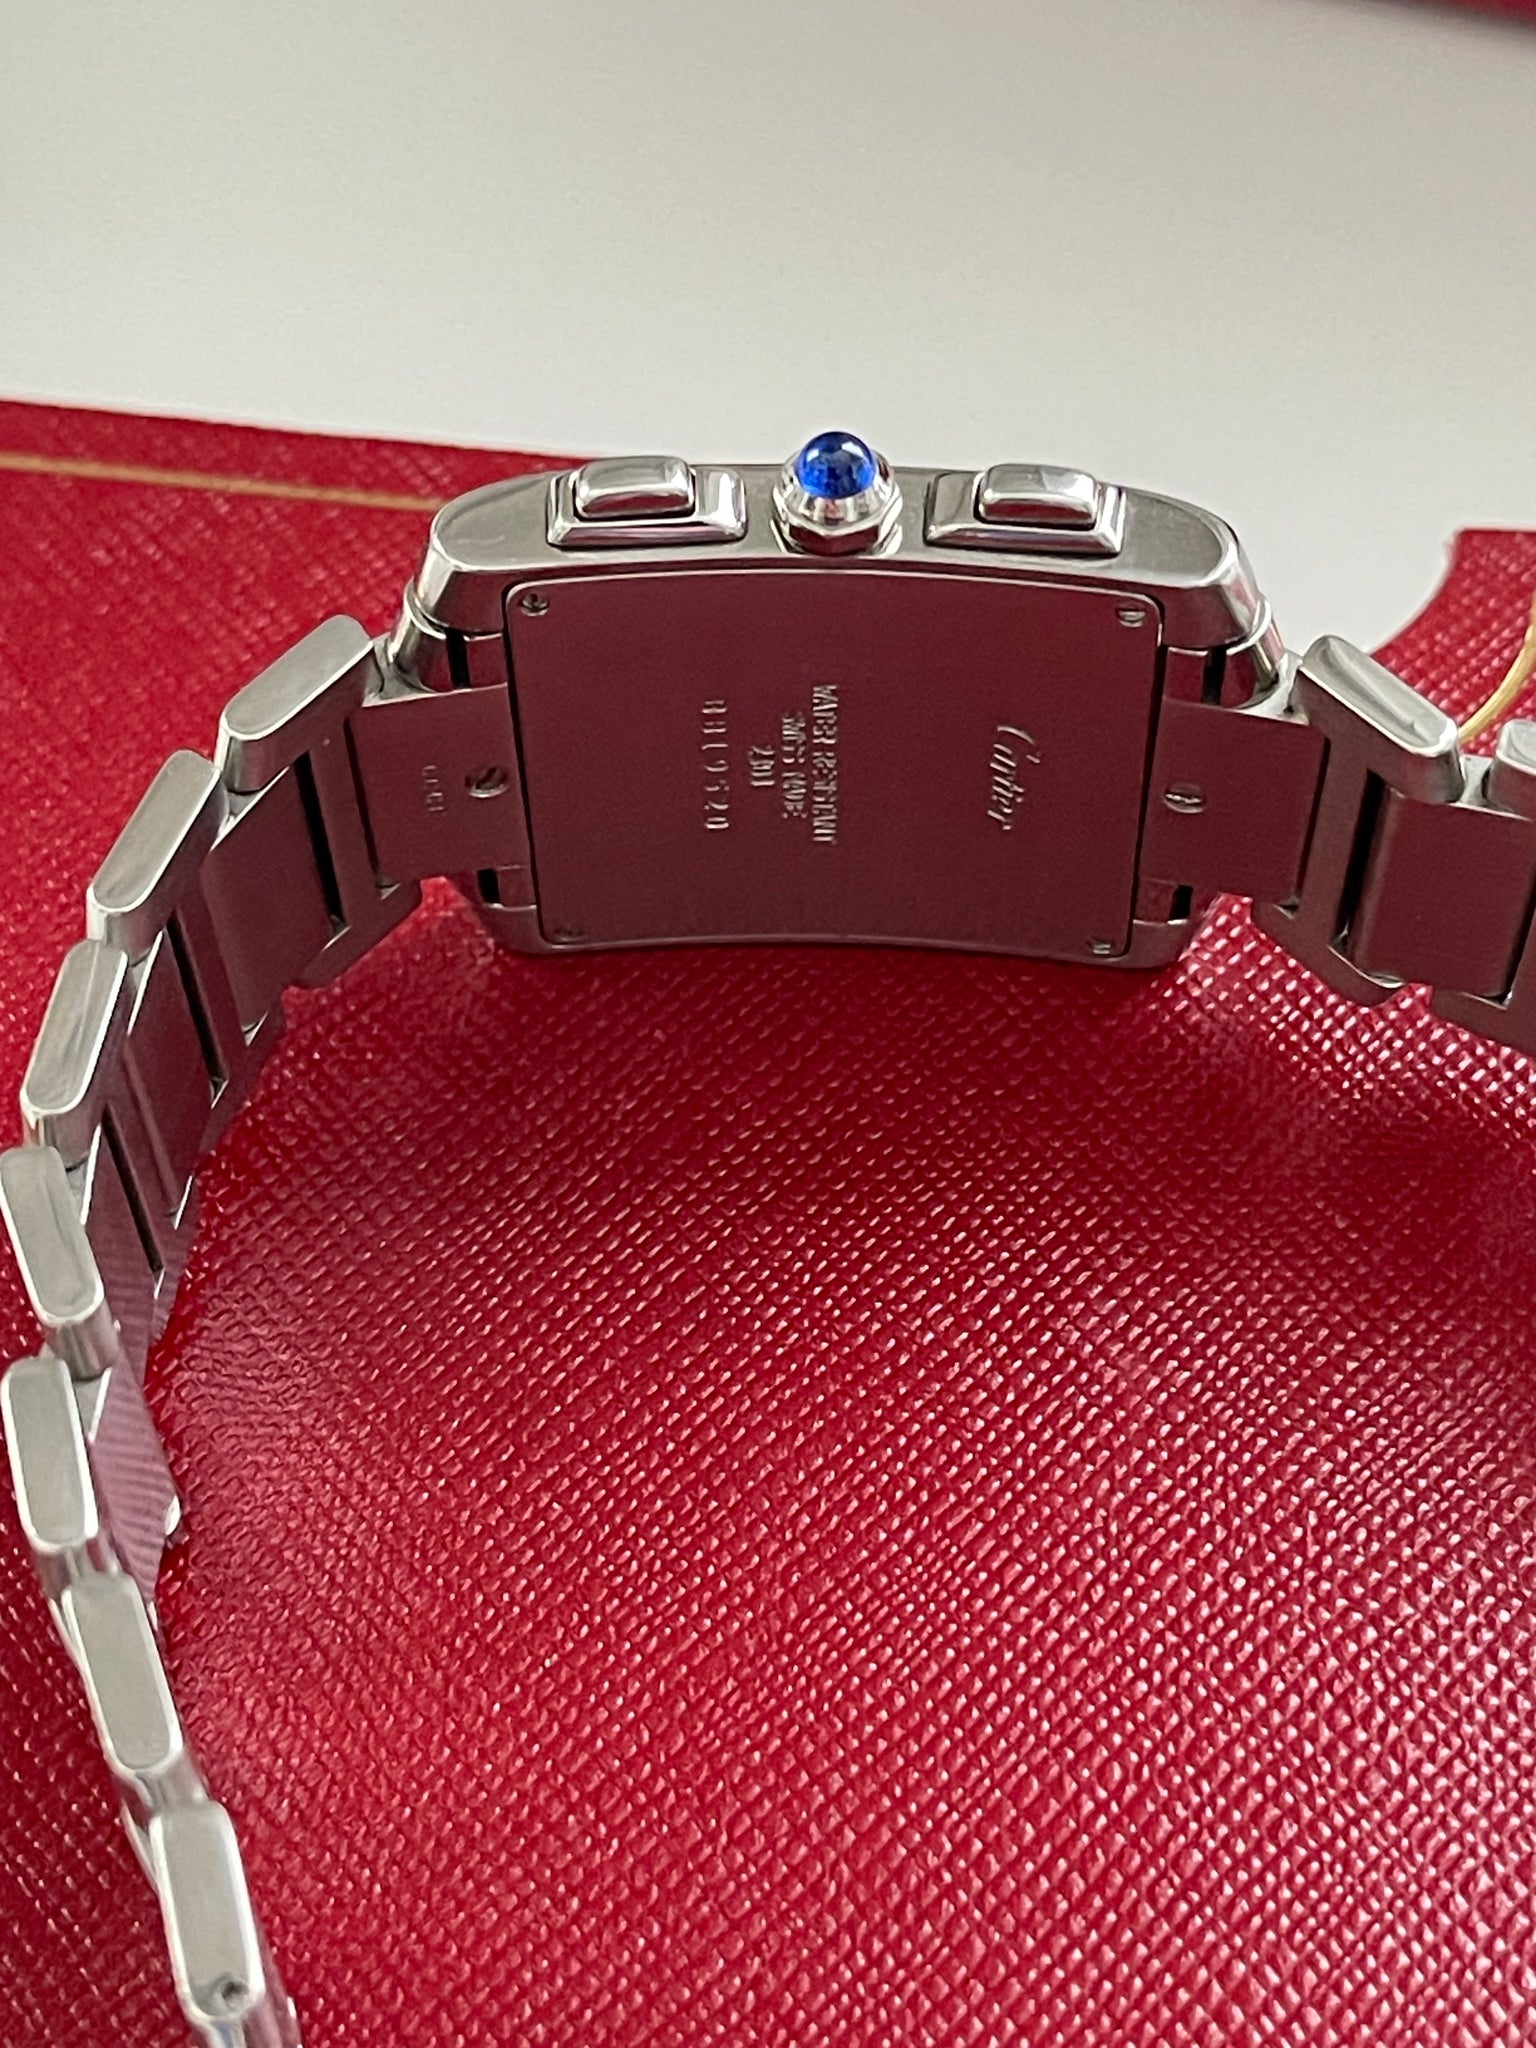 Cartier - Tank Francaise Chronoreflex Stainless Steel Bracelet